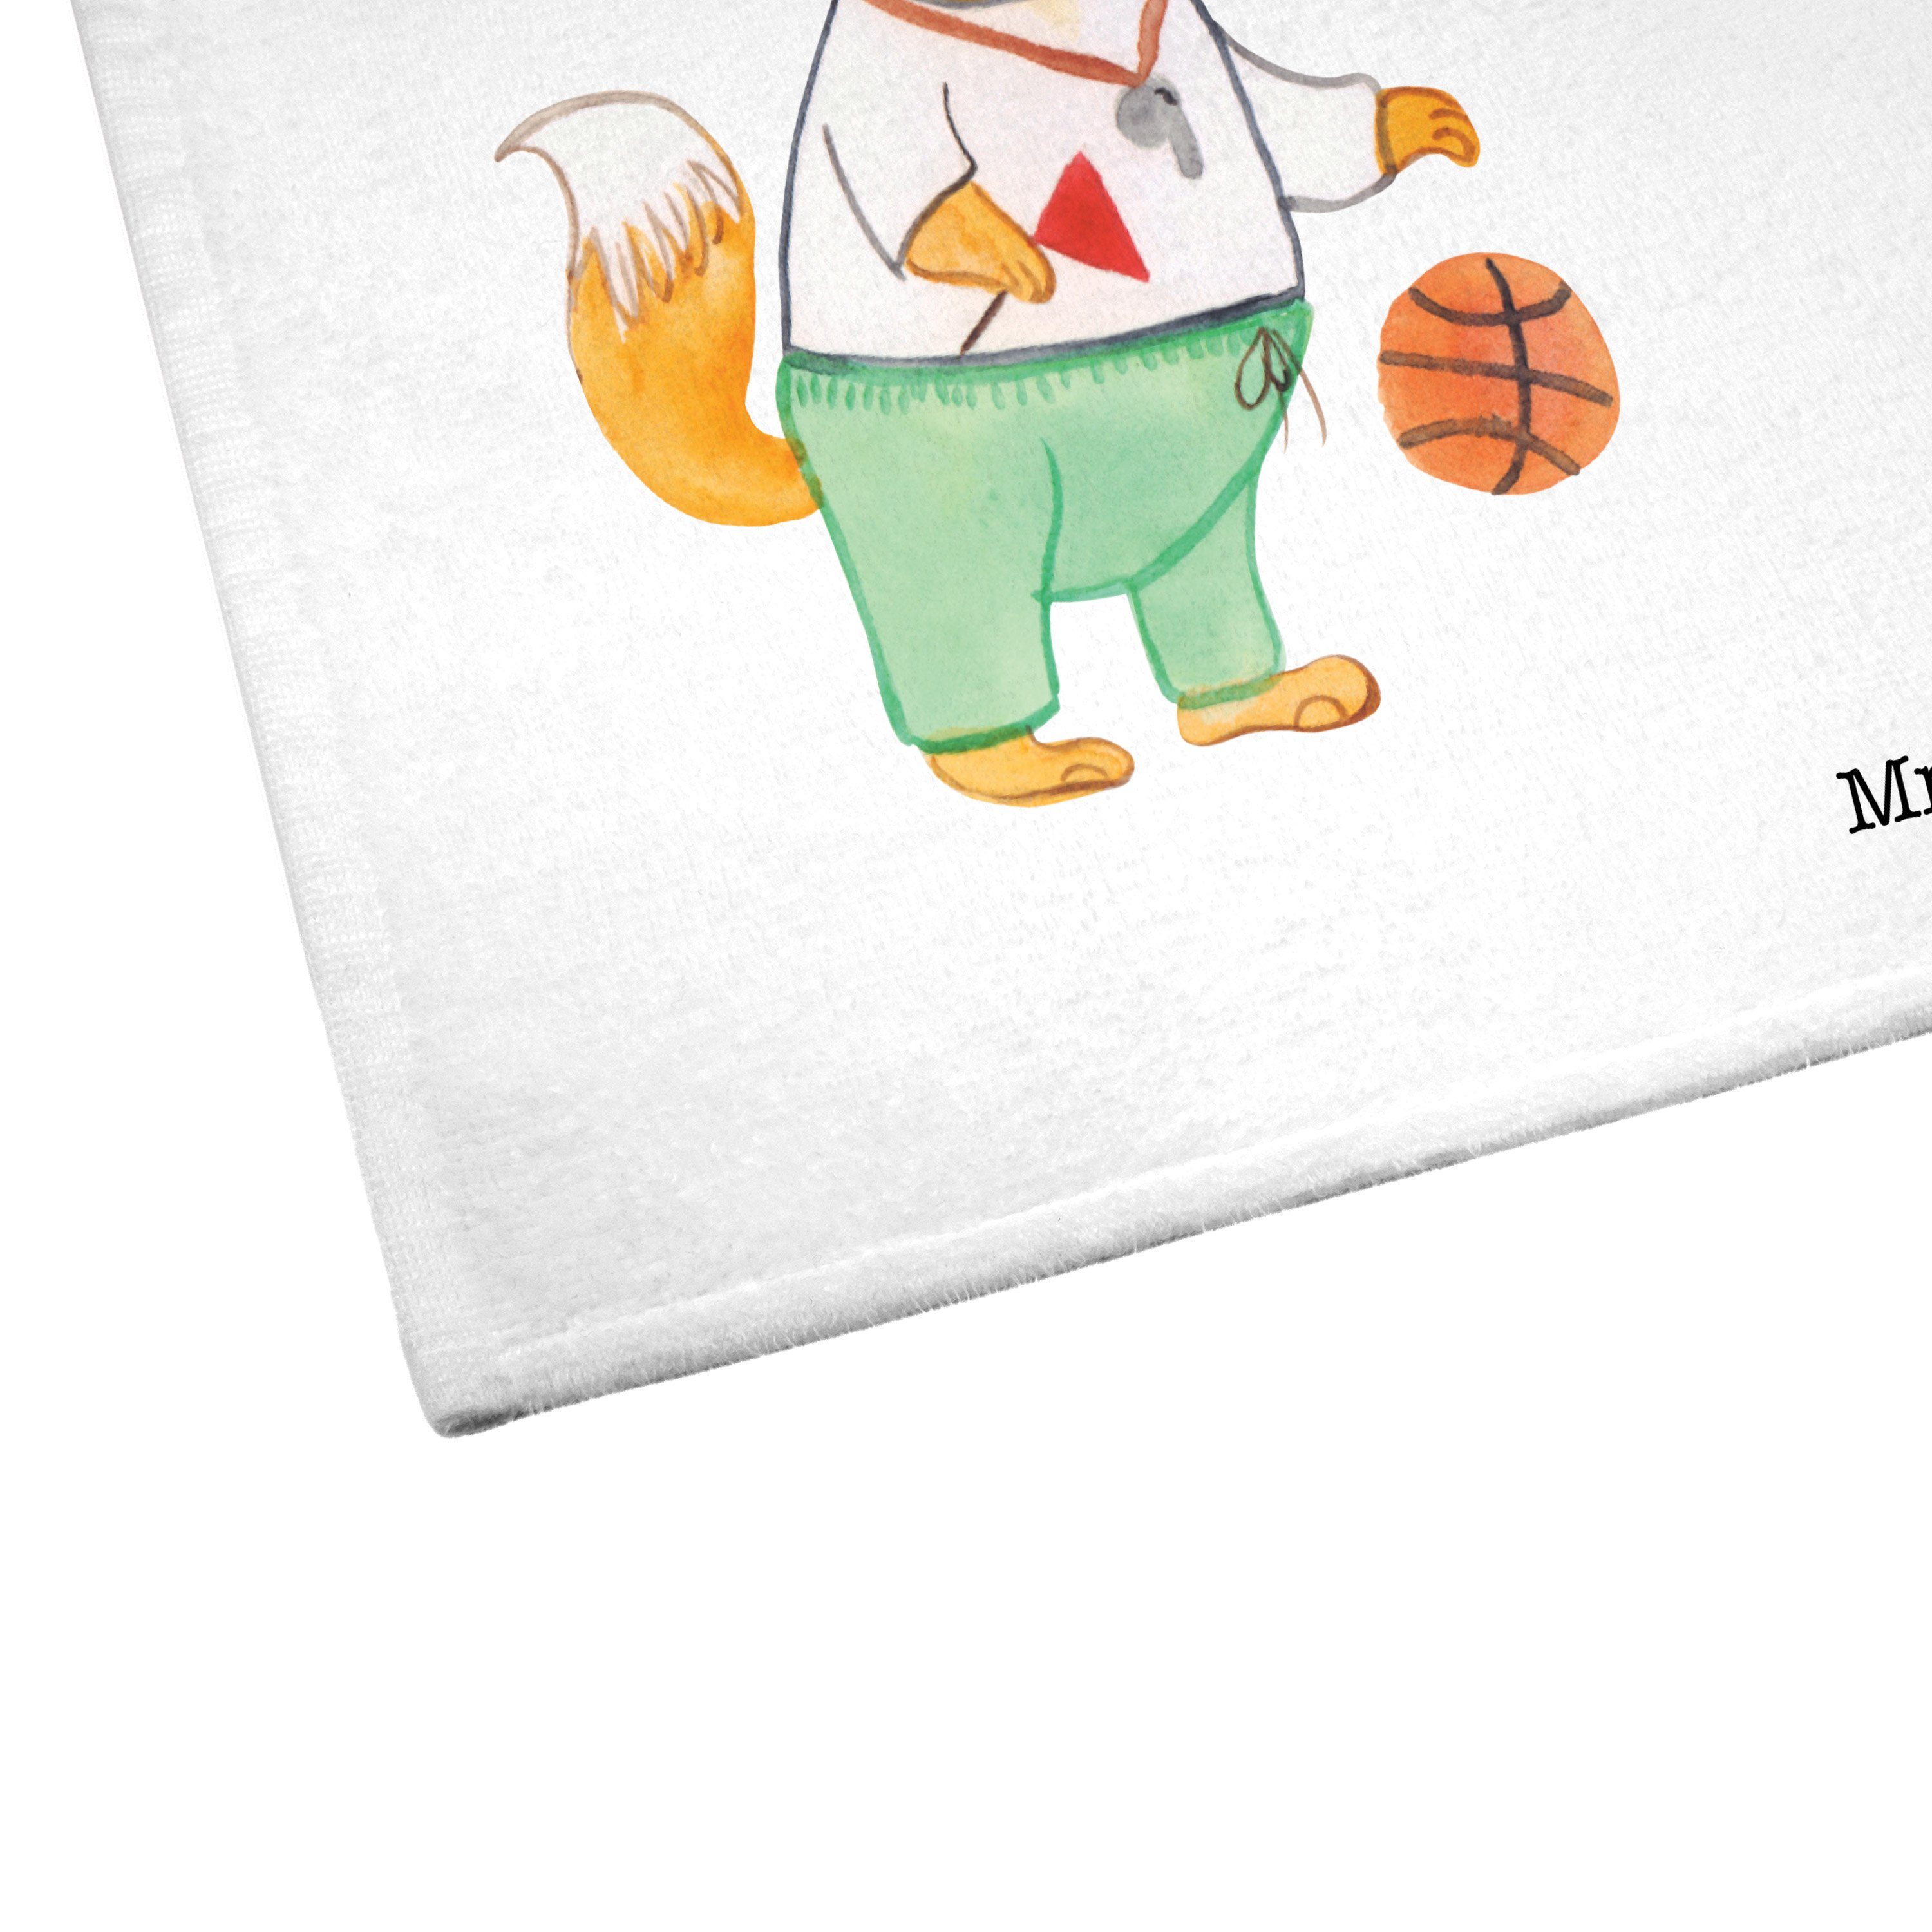 aus Mr. Basketballtrainerin & - Sport, Leidenschaft (1-St) Geschenk, Panda Mrs. Rente, Weiß - Handtuch